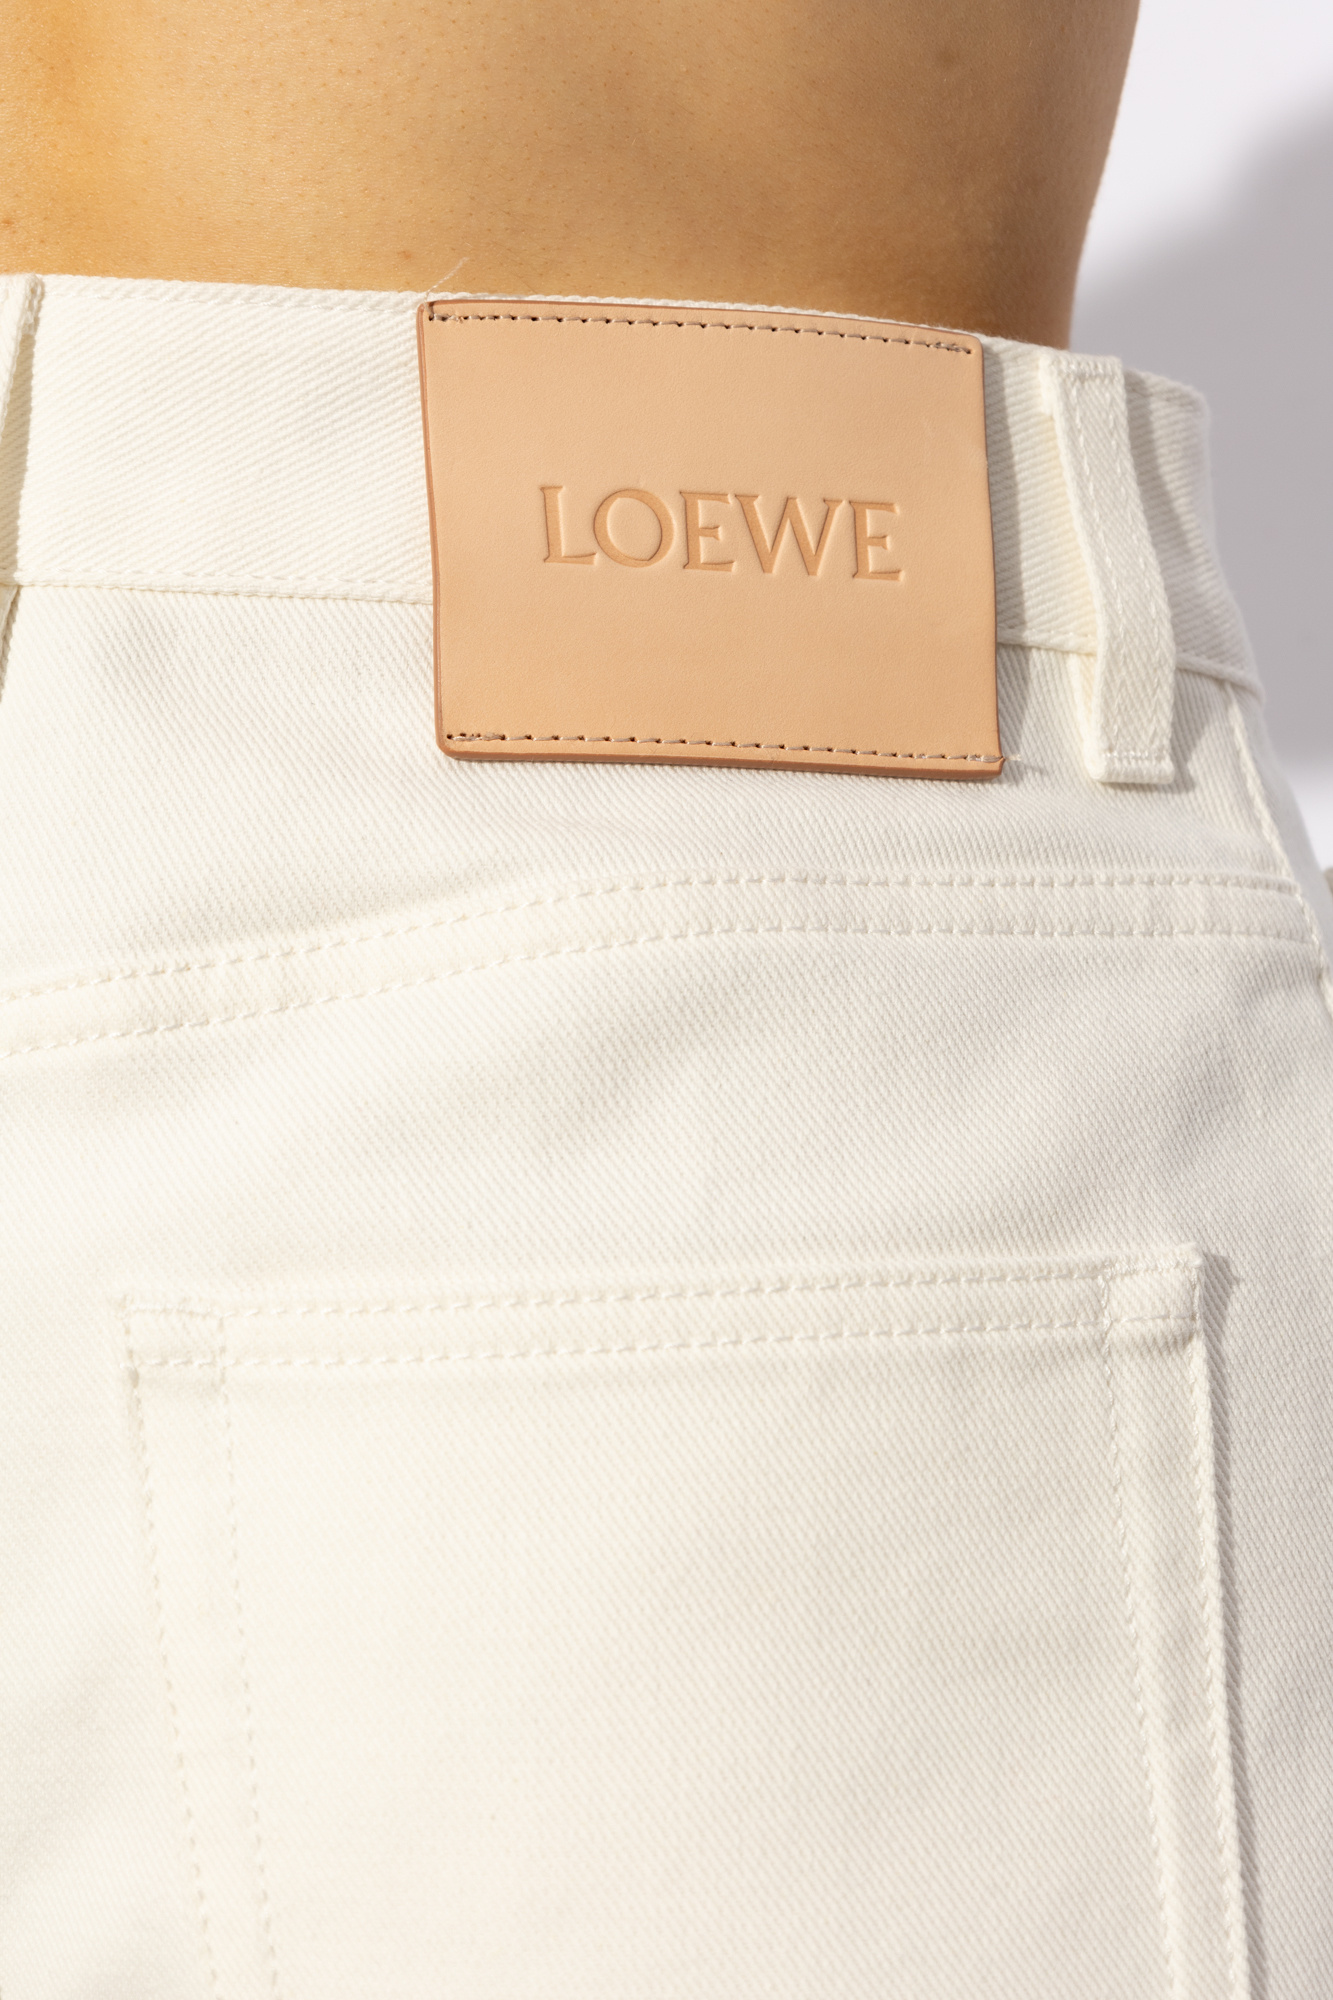 Loewe skirt with slits loewe skirt black taupe